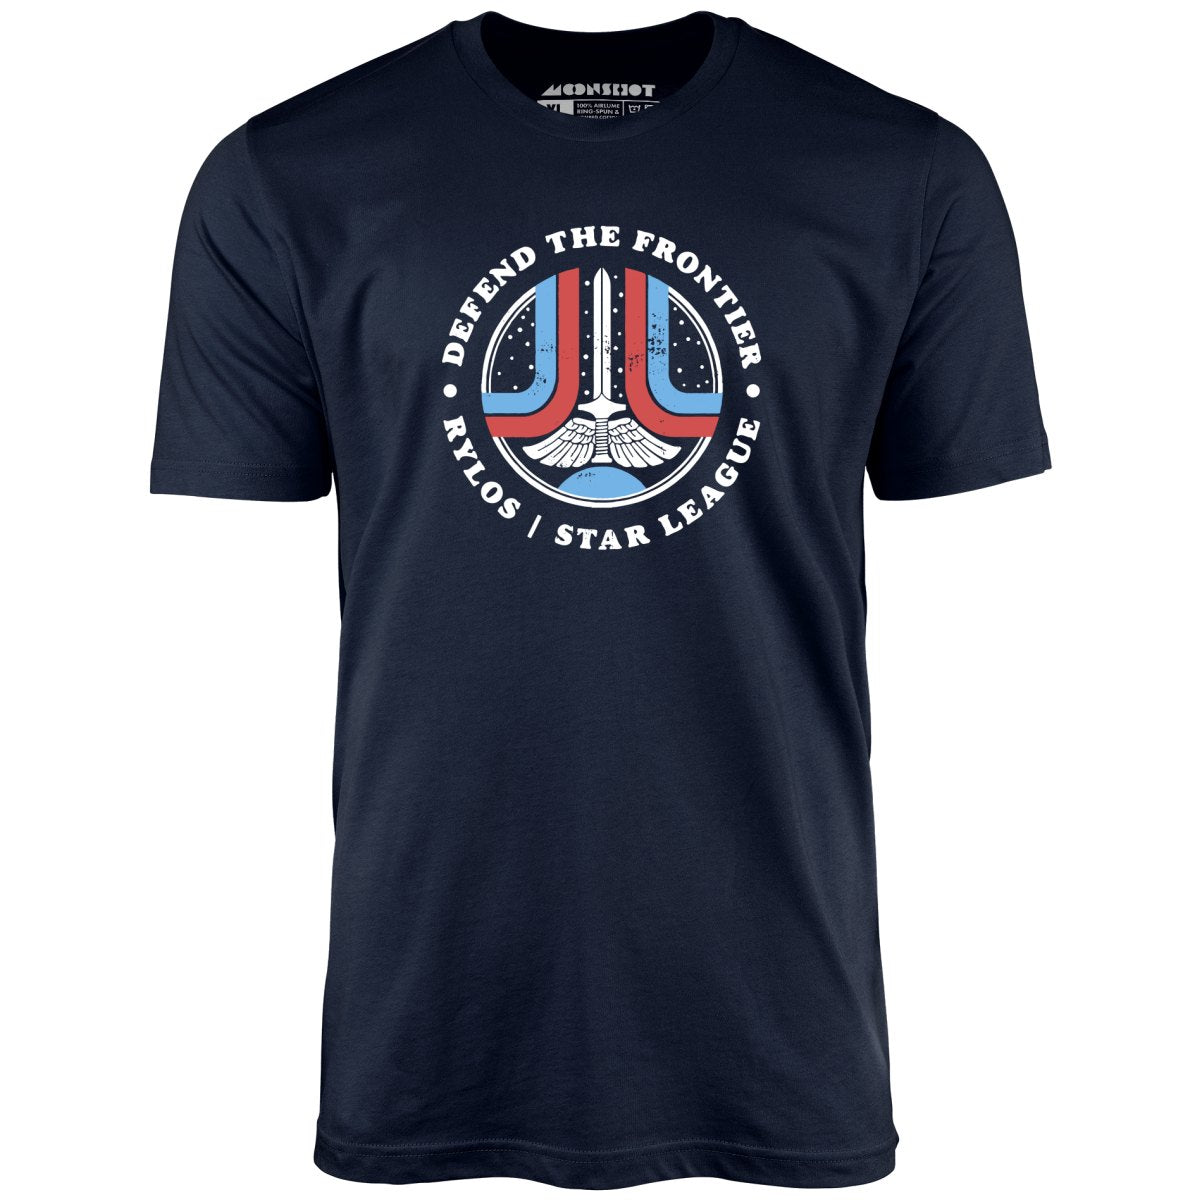 The Last Starfighter - Unisex T-Shirt